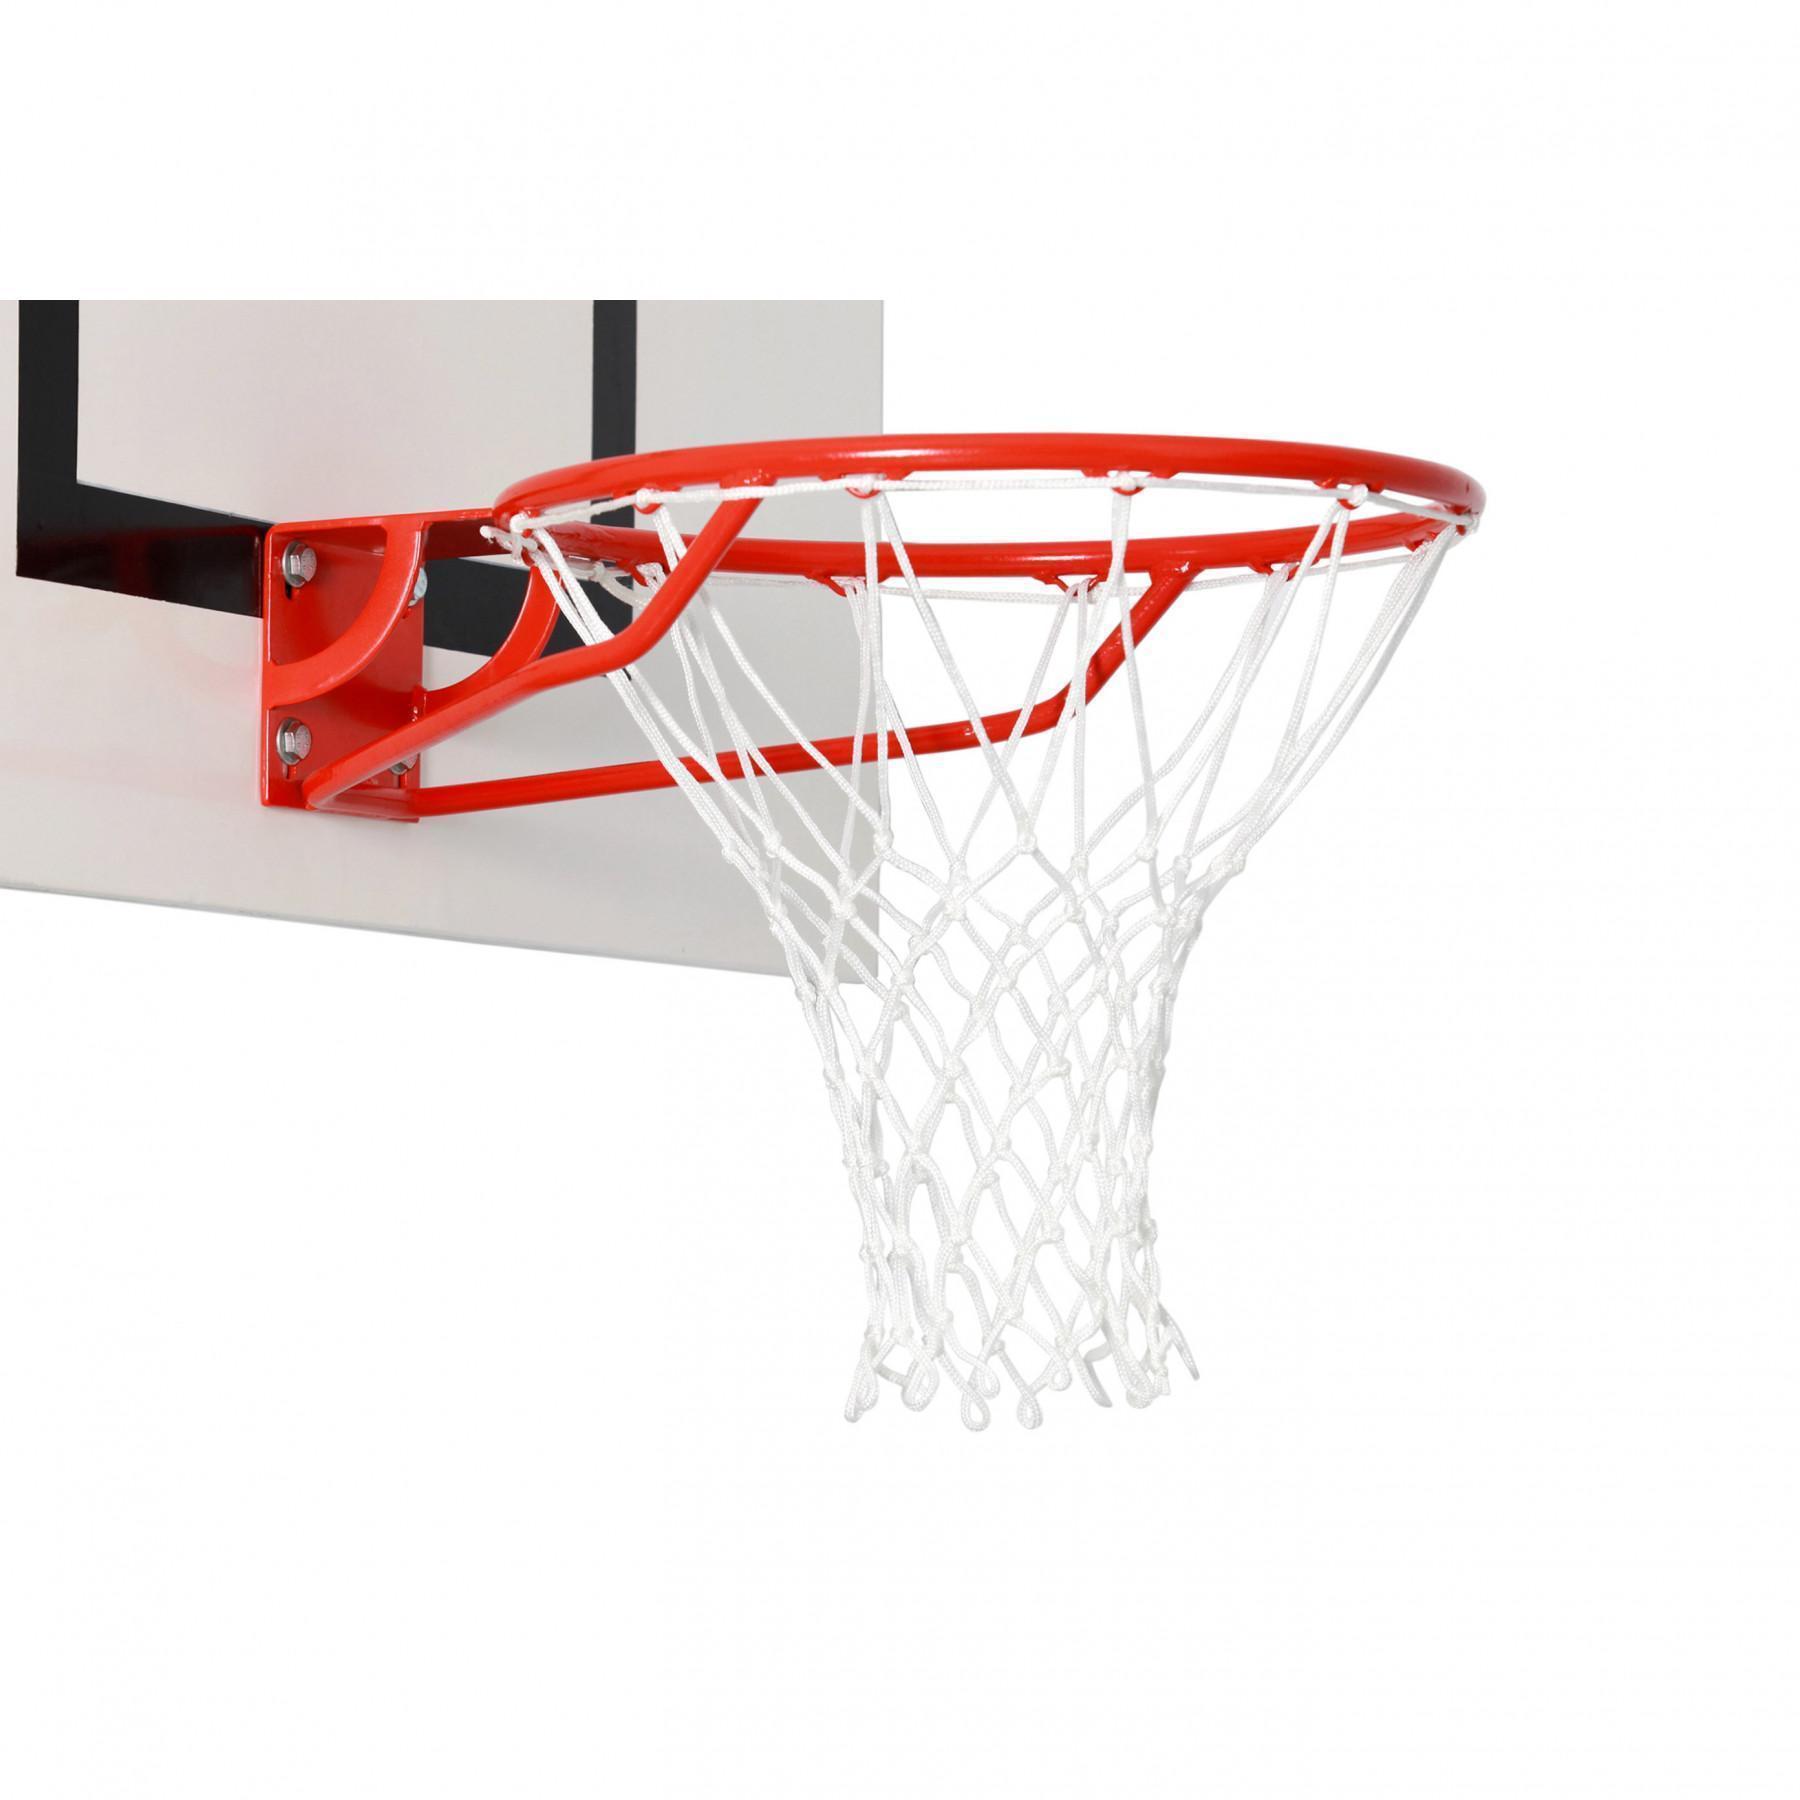 Red de baloncesto de 5 mm PowerShot